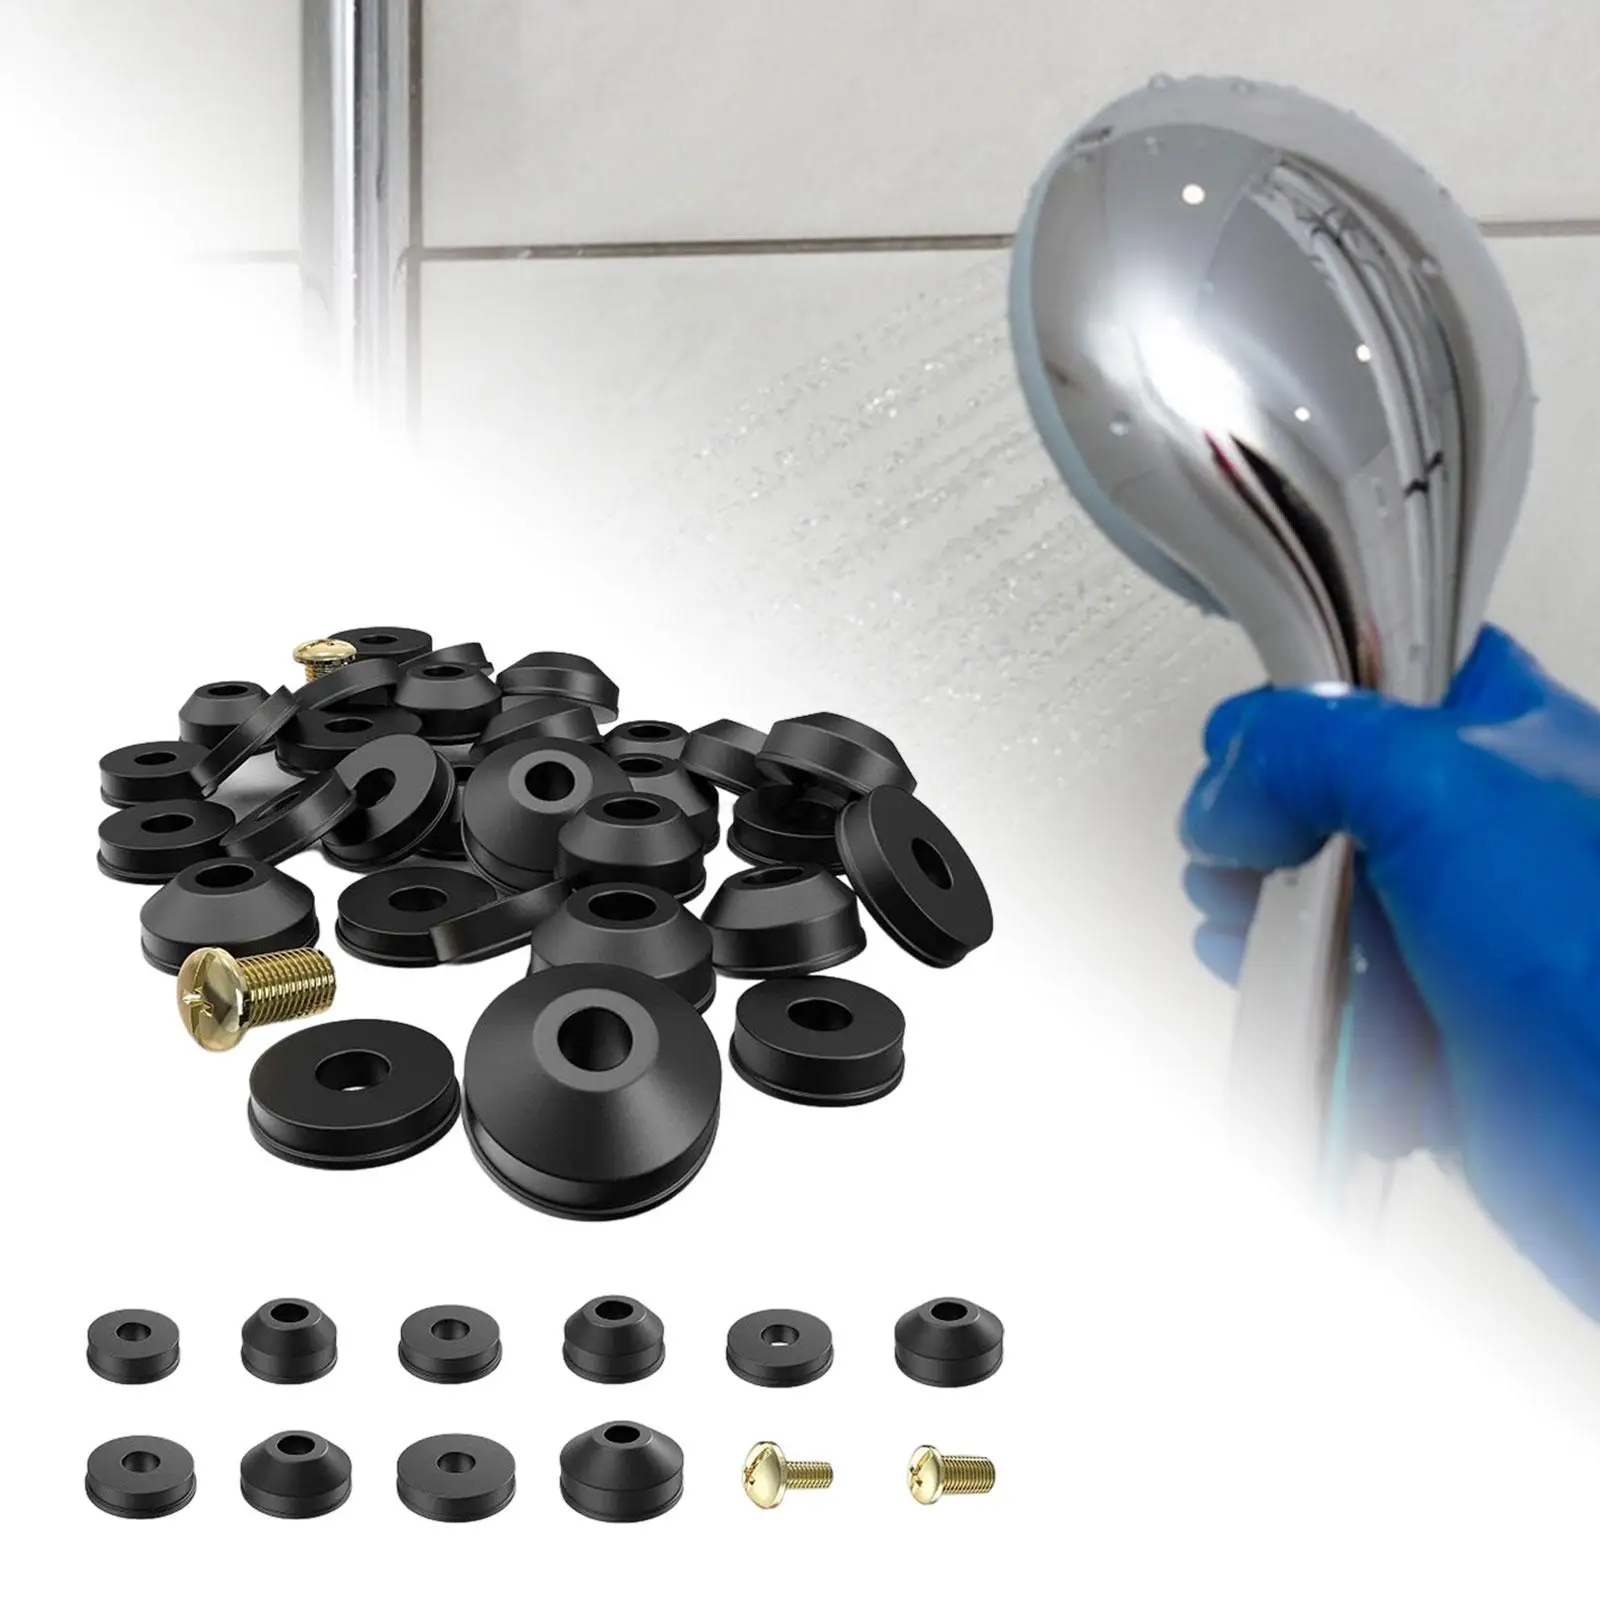 58Pcs Rubber Faucet Washer Accessories Assortment for Maintenance Plumbing Repair